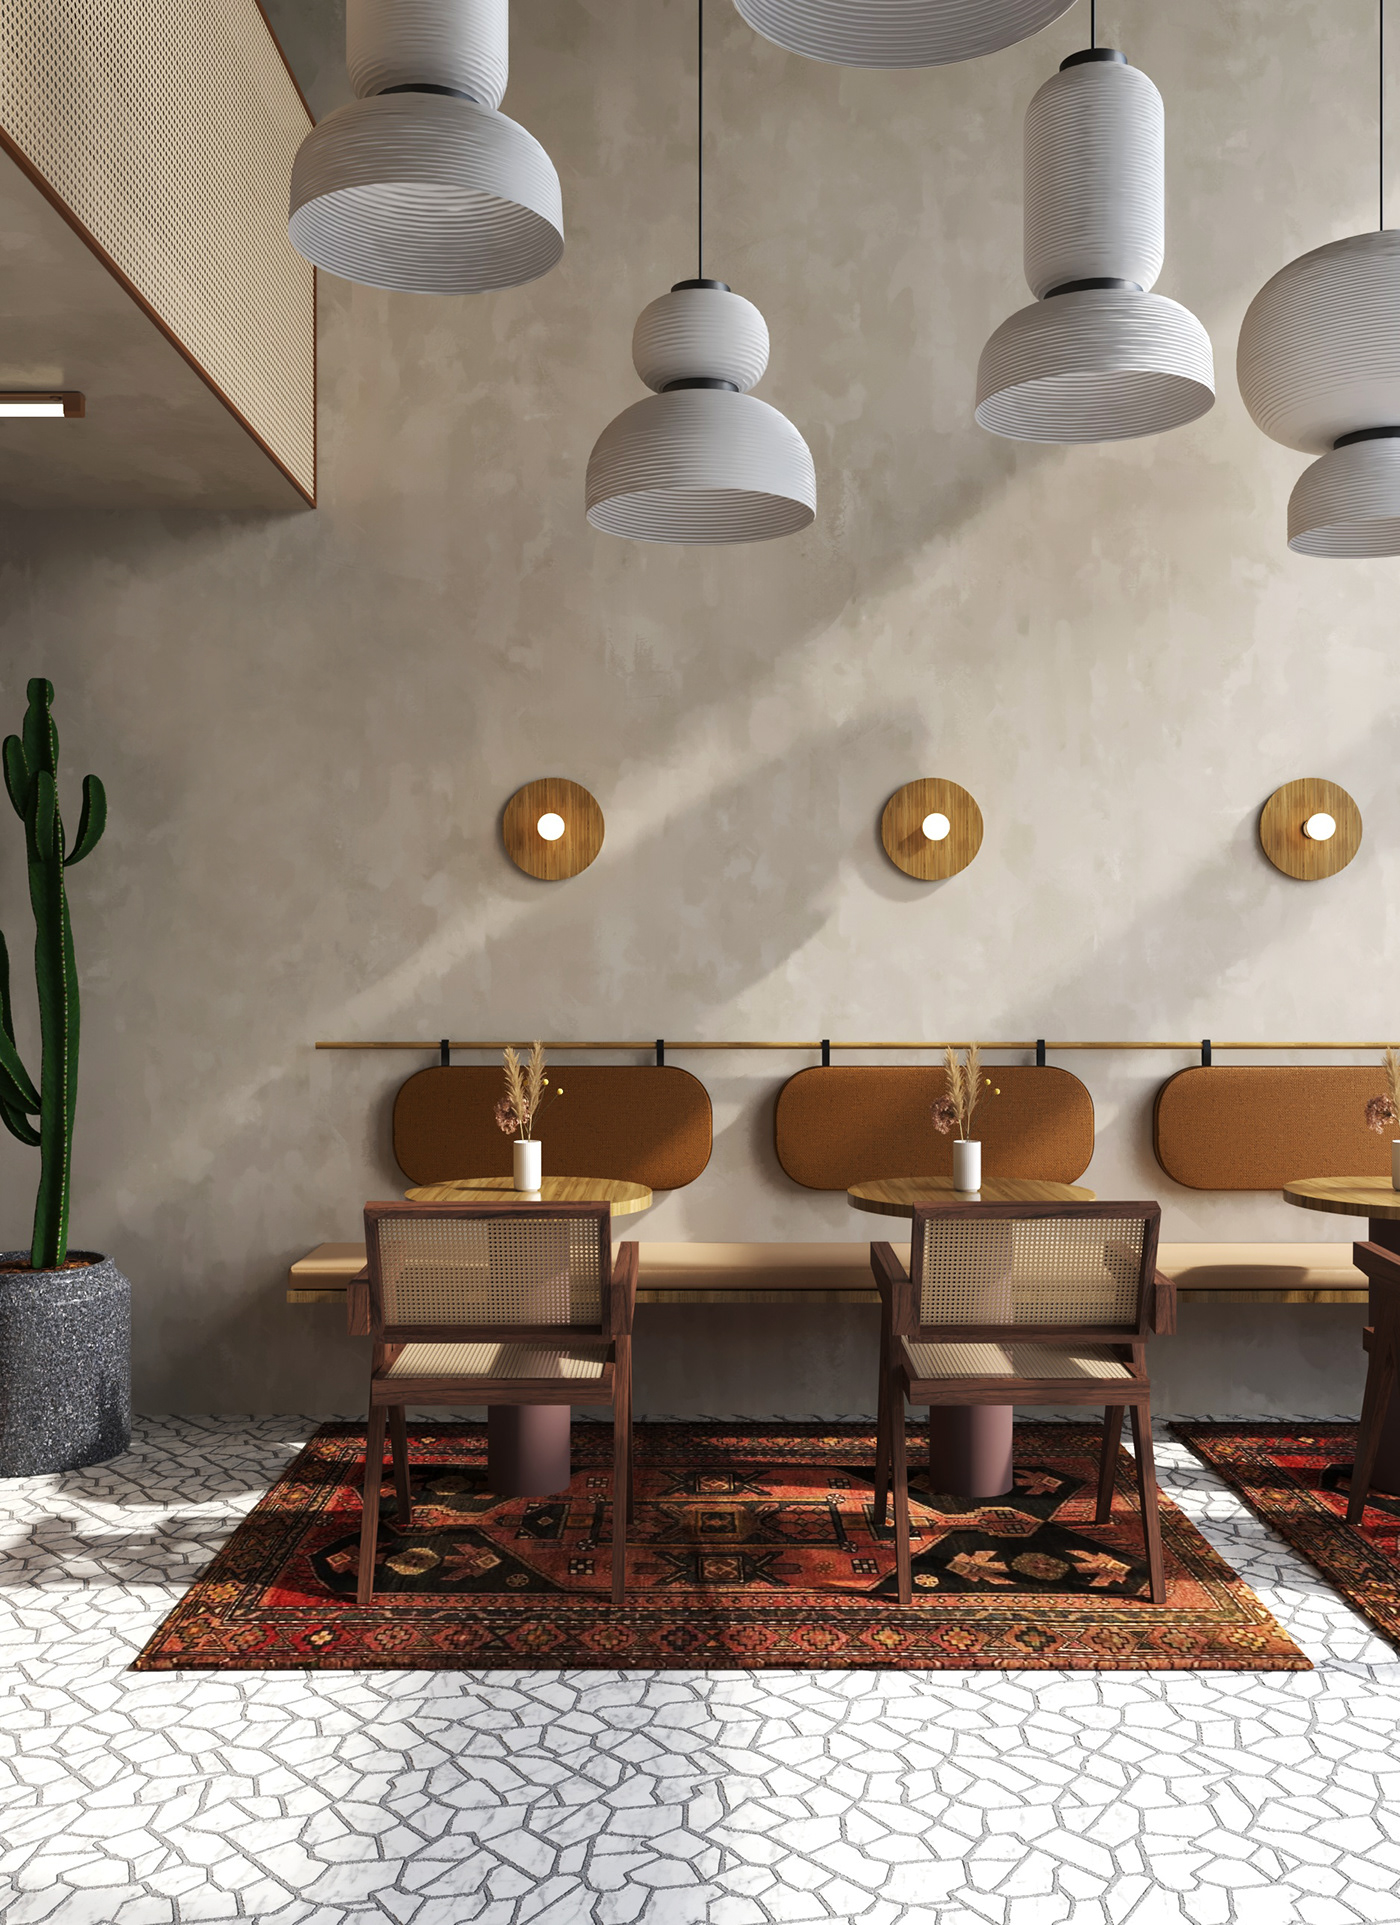 Interior cafe Coffee interiordesign architecture